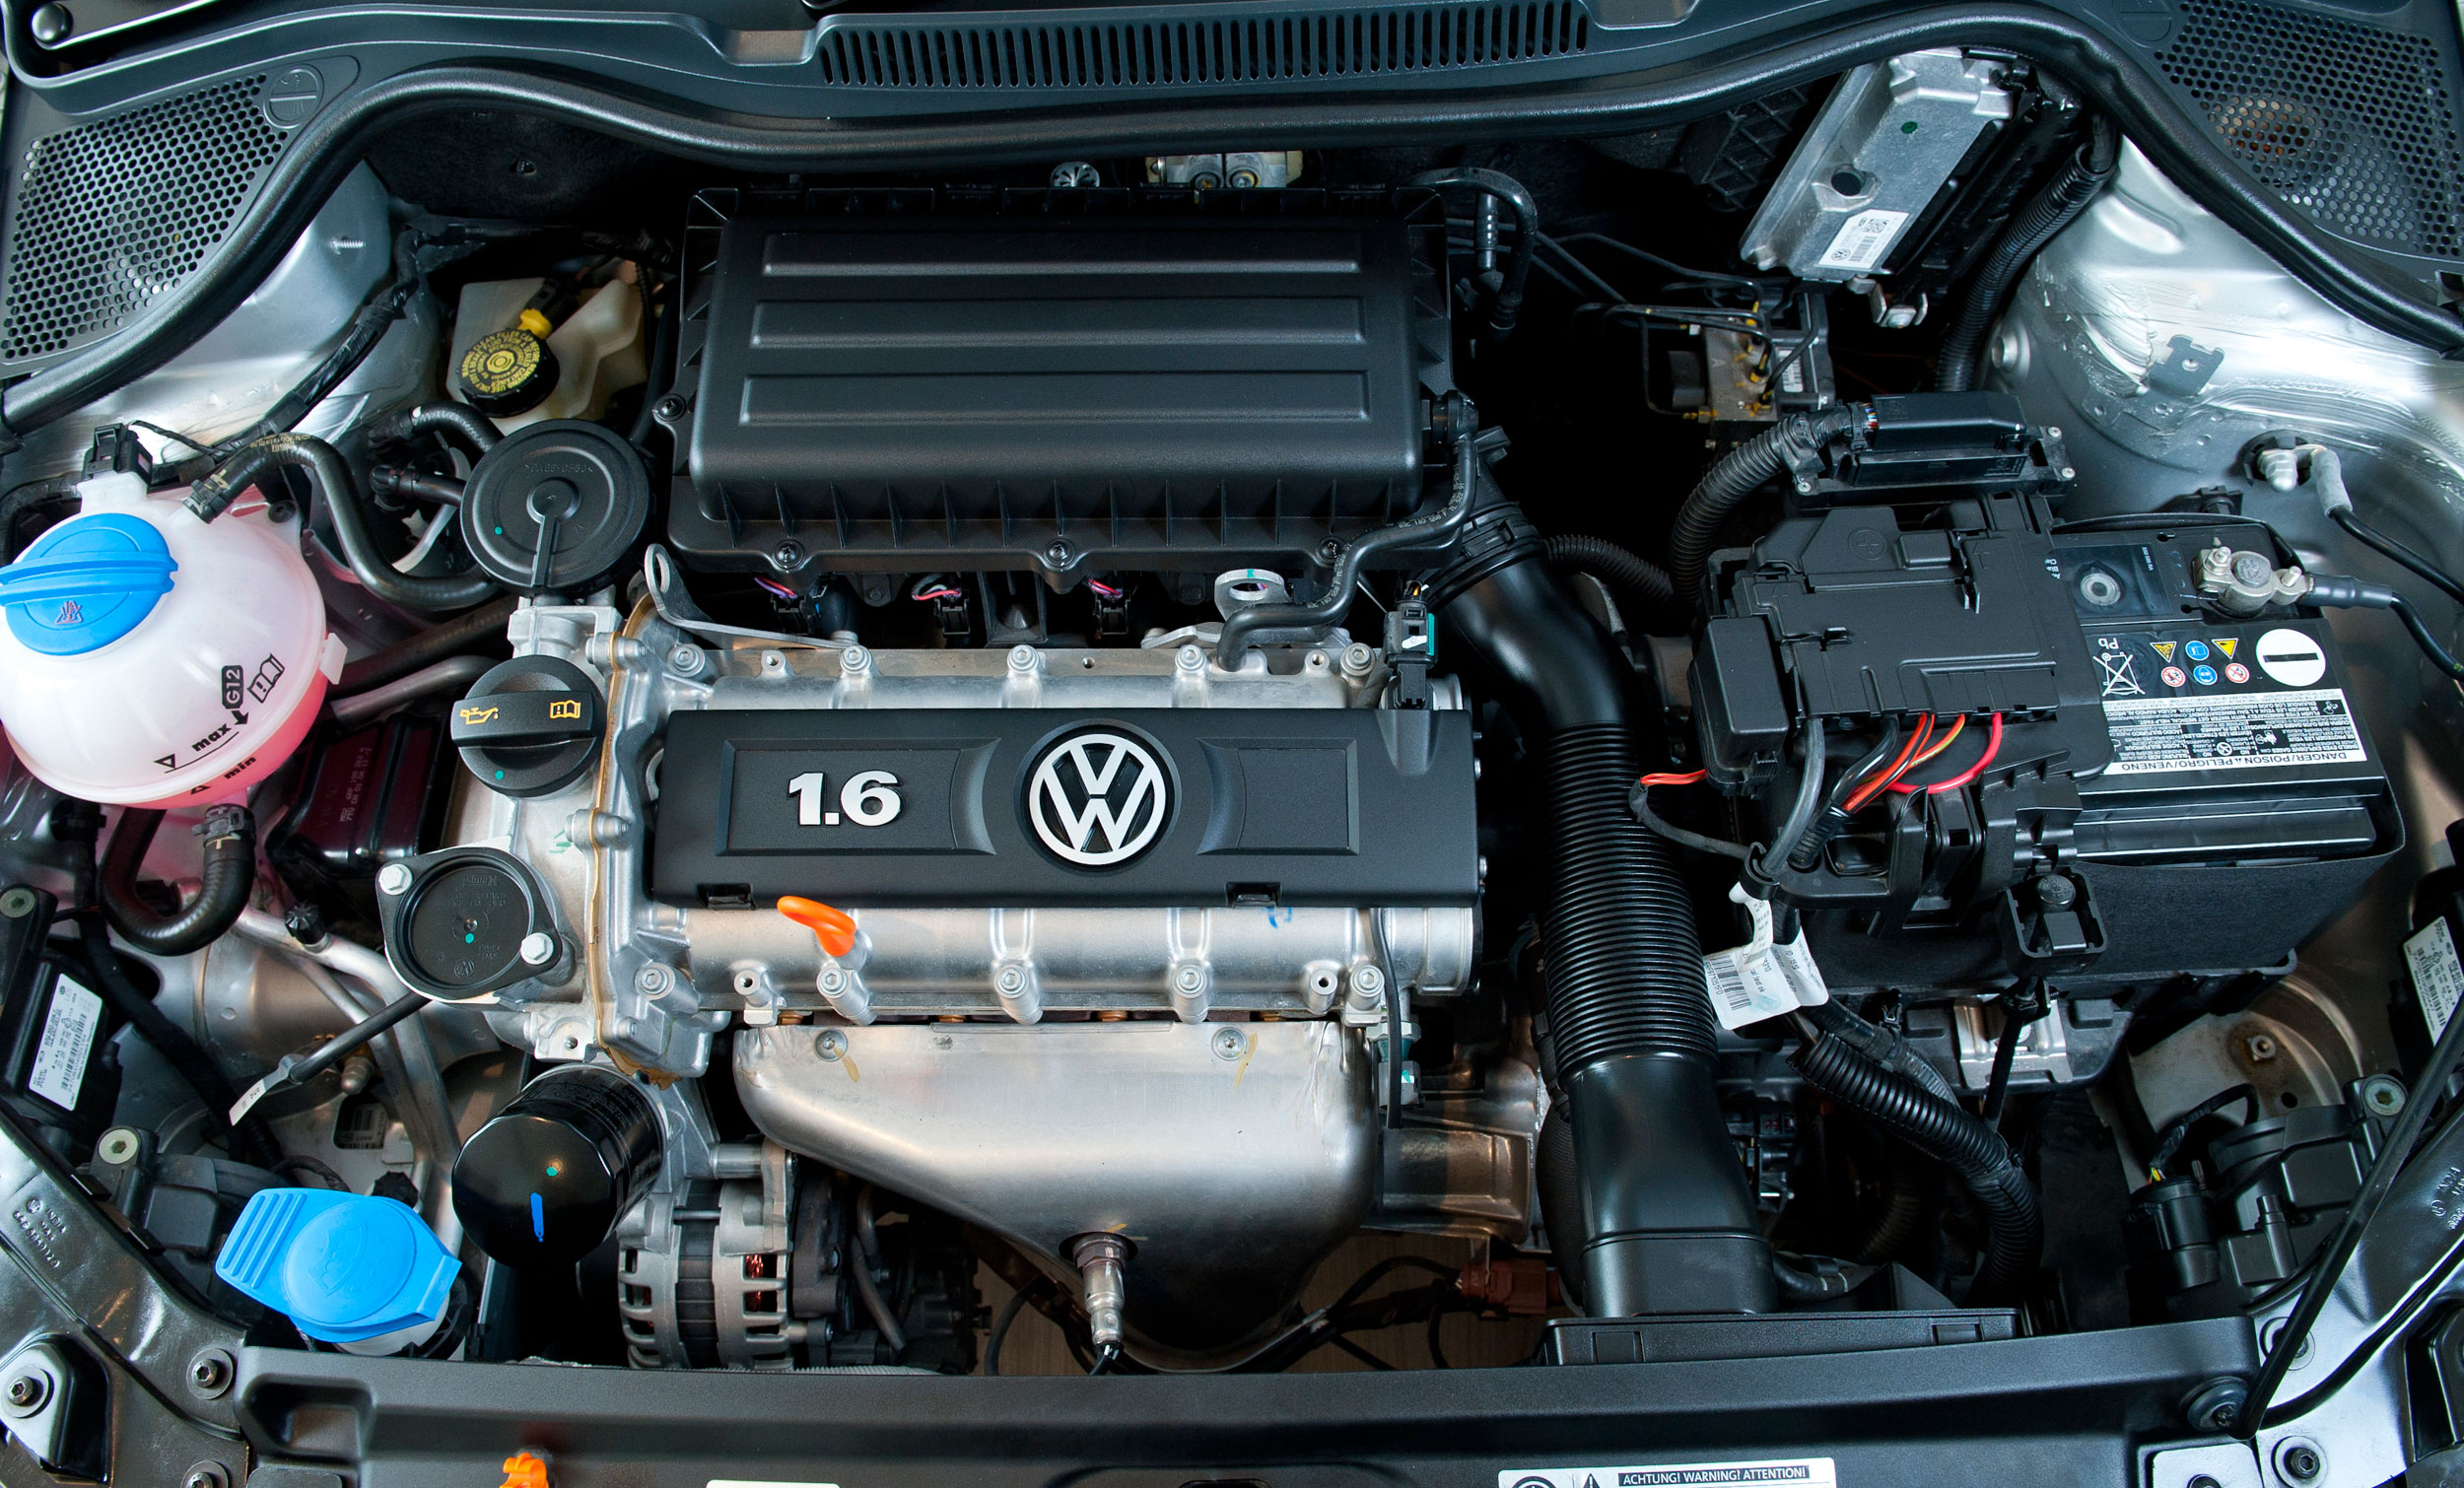 Volkswagen polo мотор. Двигатель Volkswagen Polo 1.4. ДВС Фольксваген поло седан 1.6. Двигатель поло седан 1.6 105. Двигатель Volkswagen Polo 1.6.